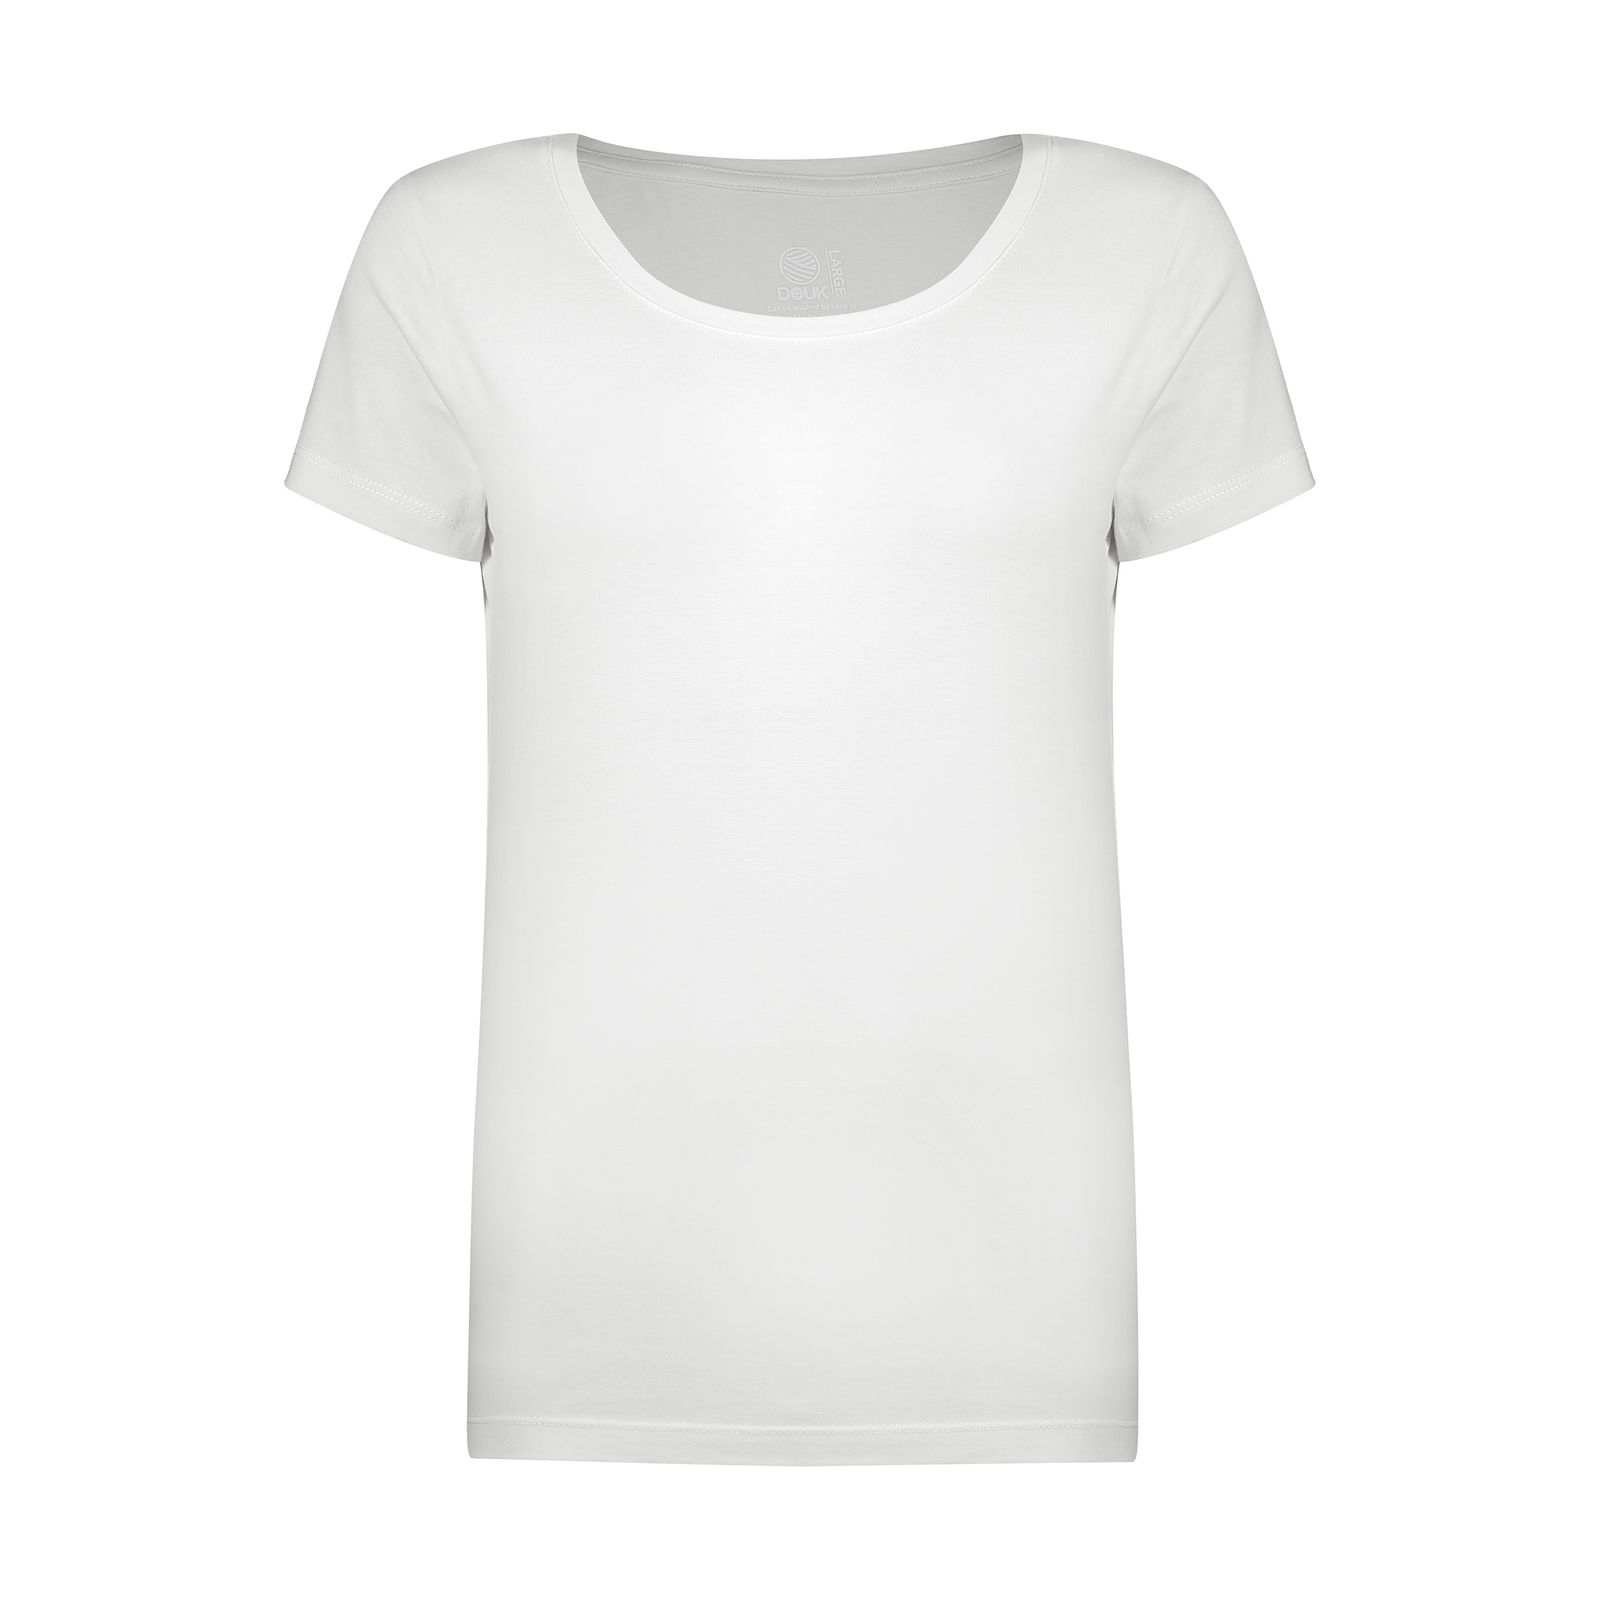 تی شرت زنانه سون پون مدل 2391174-01 -  - 1